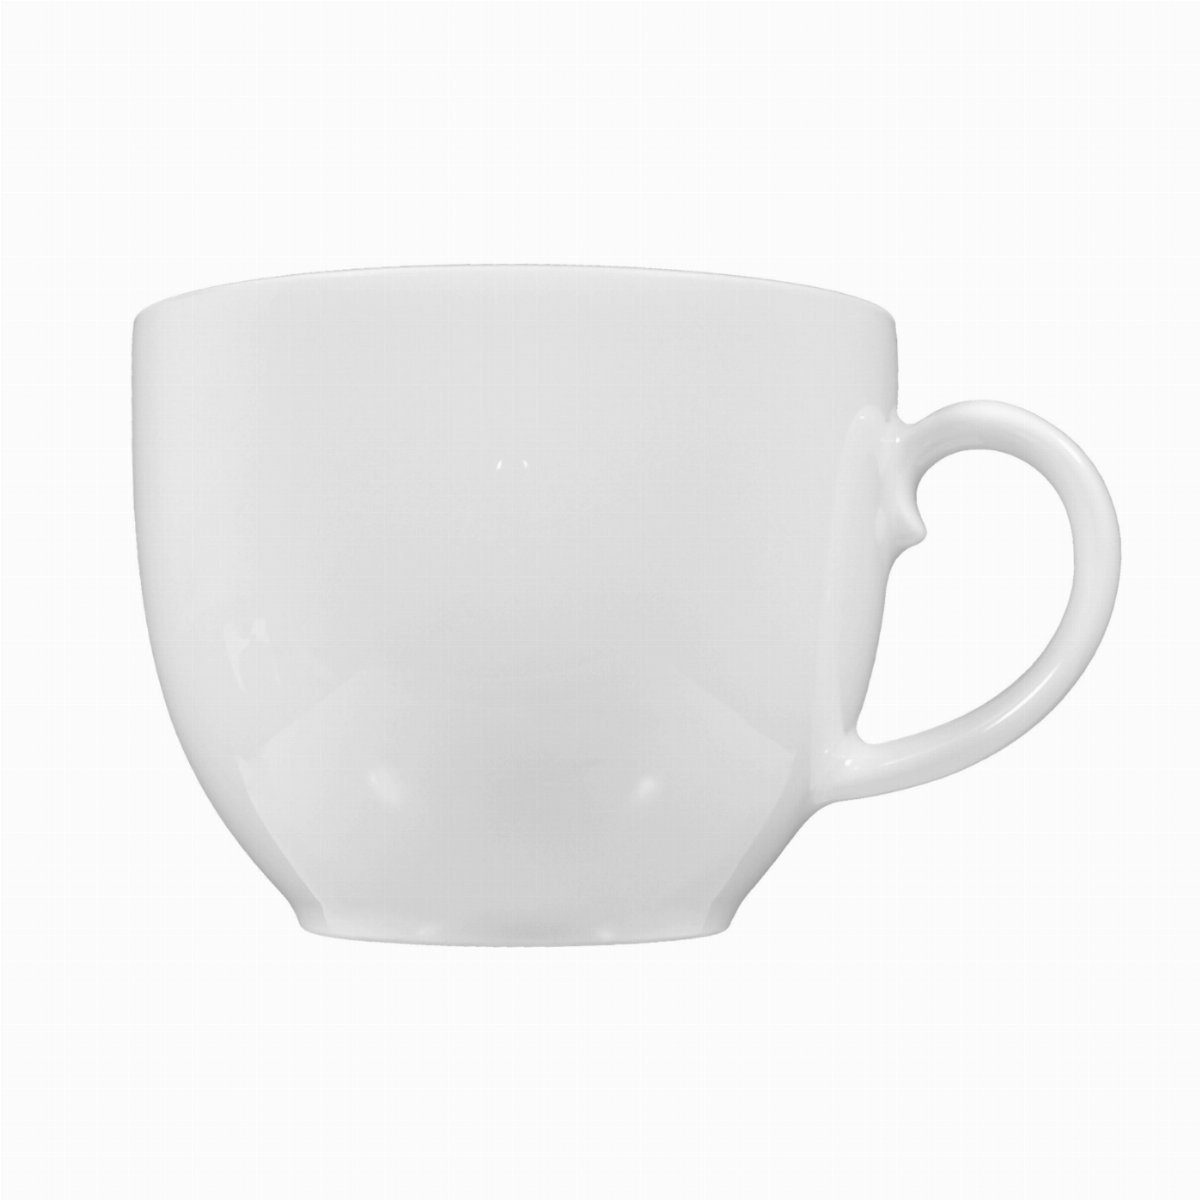 Stück - weiß - Kaffeeobertasse 6 Tasse l 0.21 Weiden Seltmann Rondo_Liane